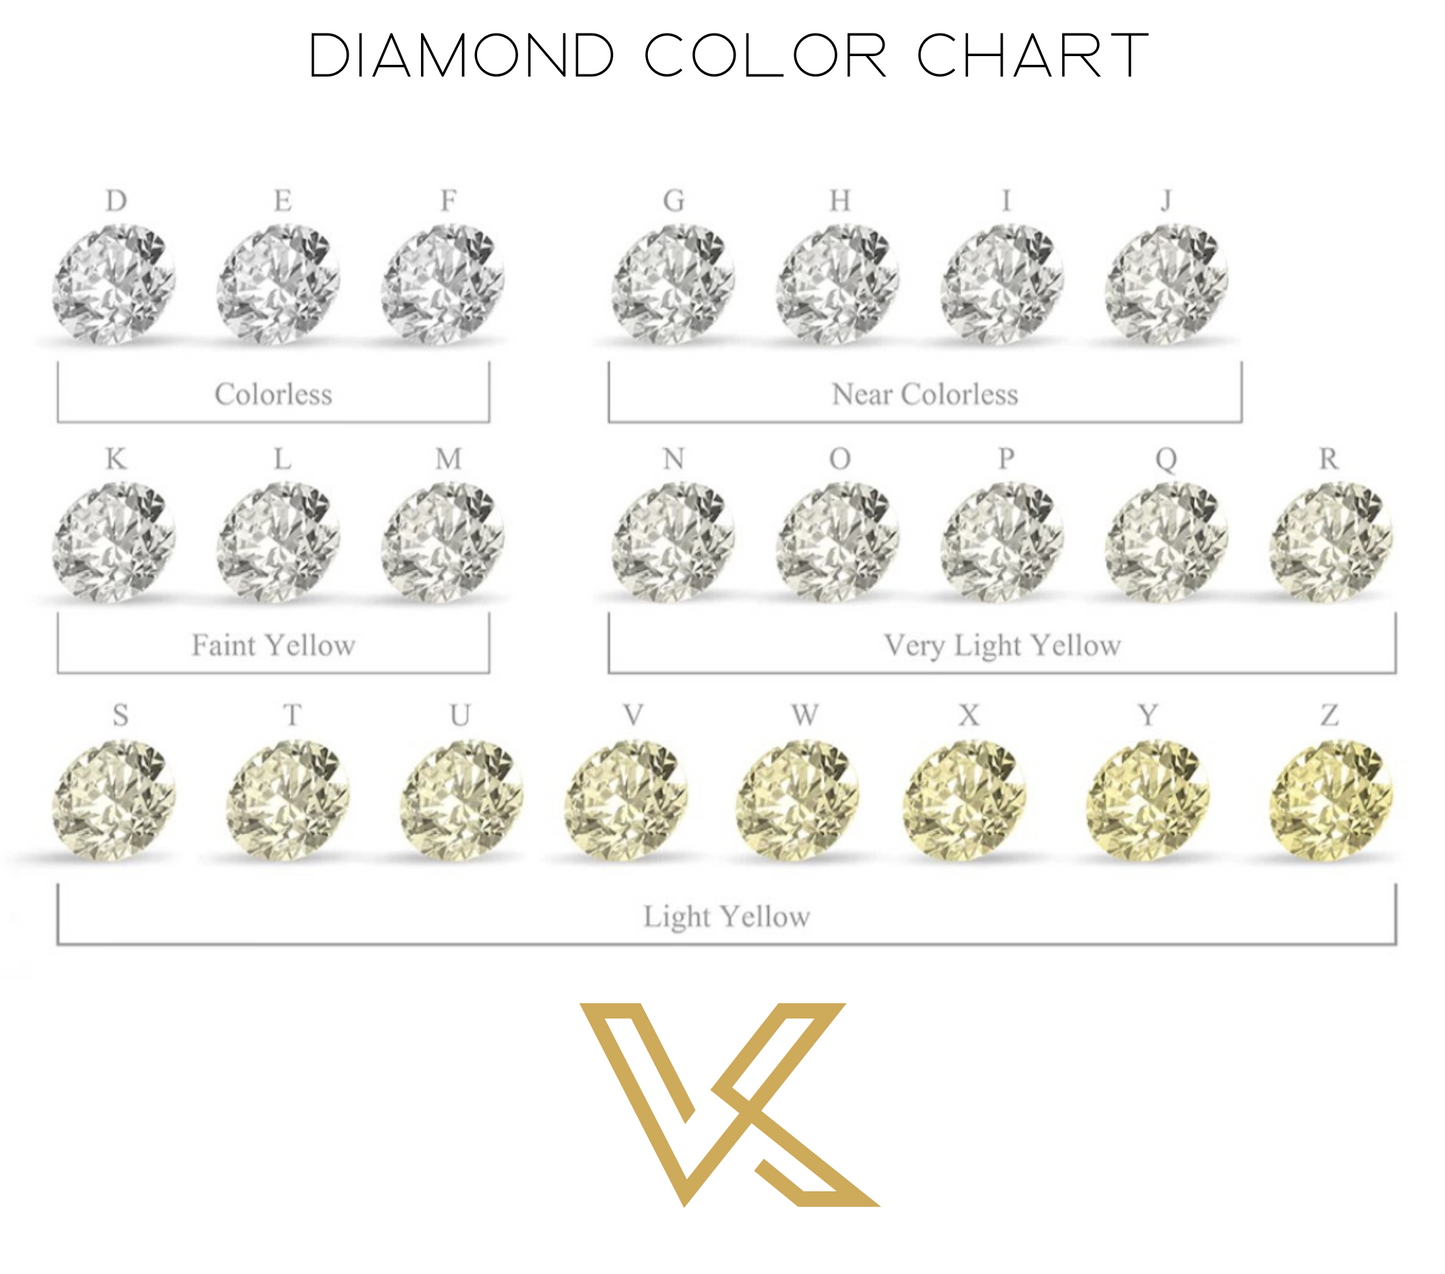 Luxury Diamond Earrings. 0.80 Carat. Natural Diamond jewelry.